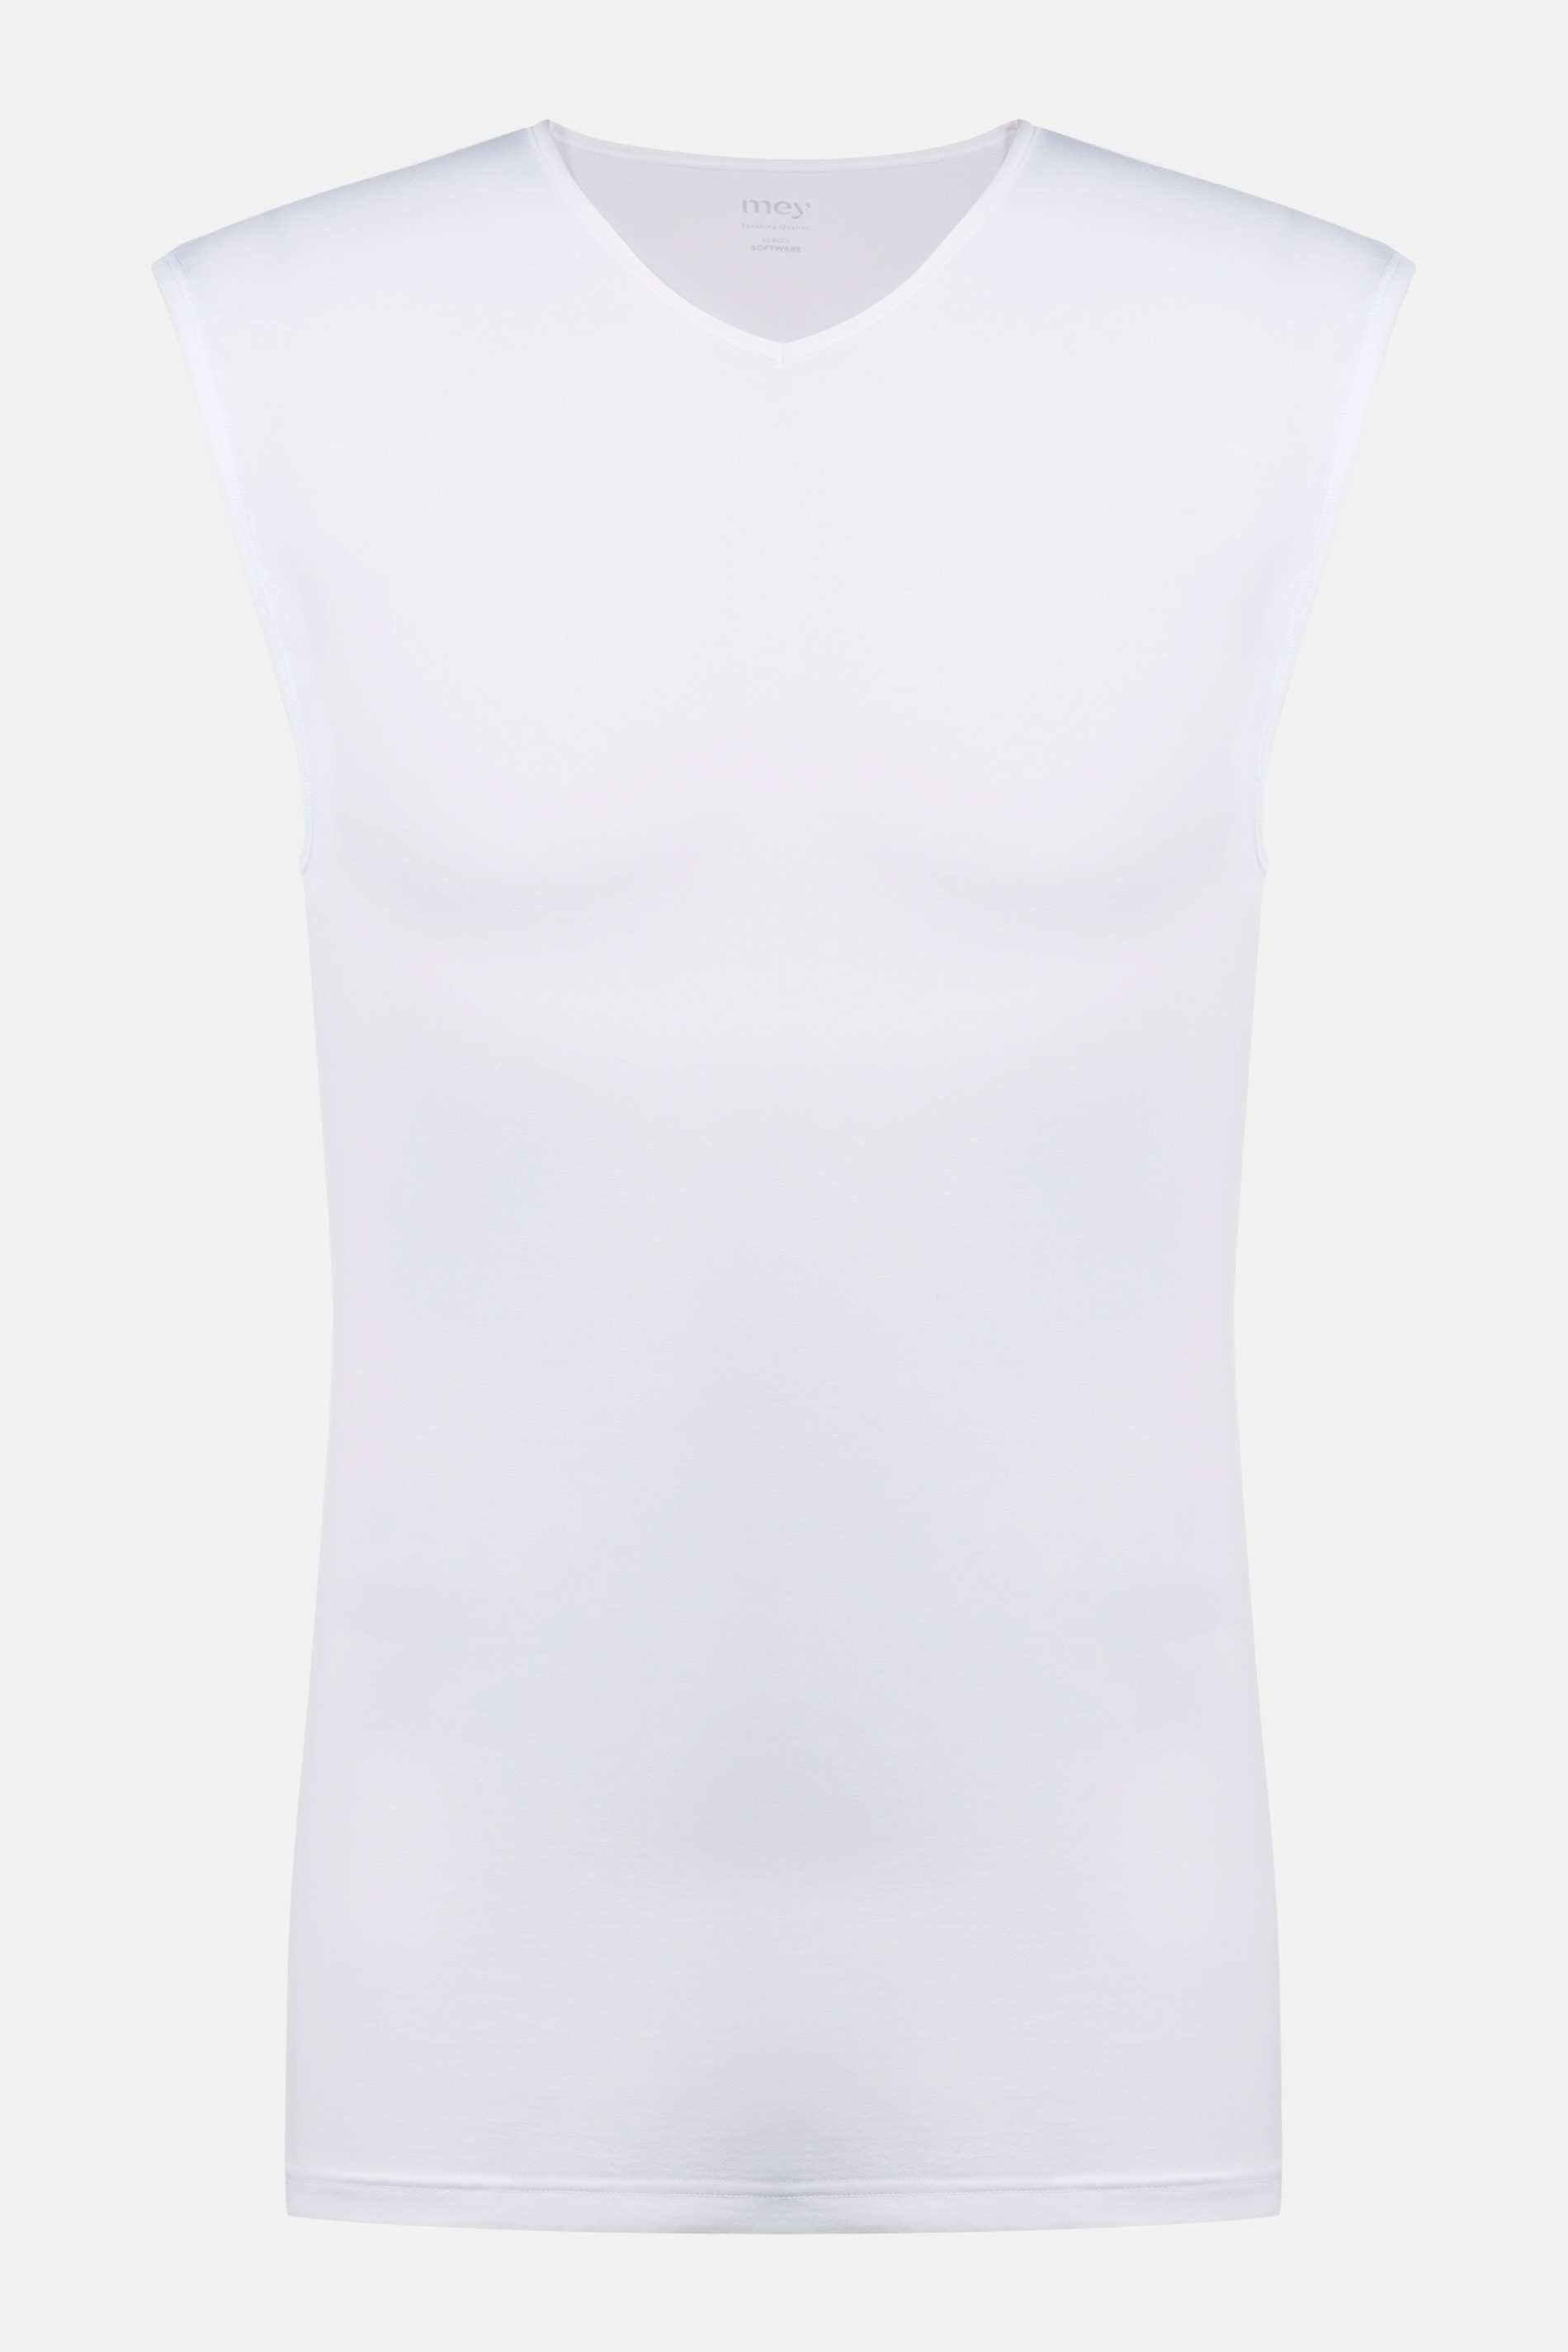 Sleeveless shirt White Serie Software Cut Out | mey®